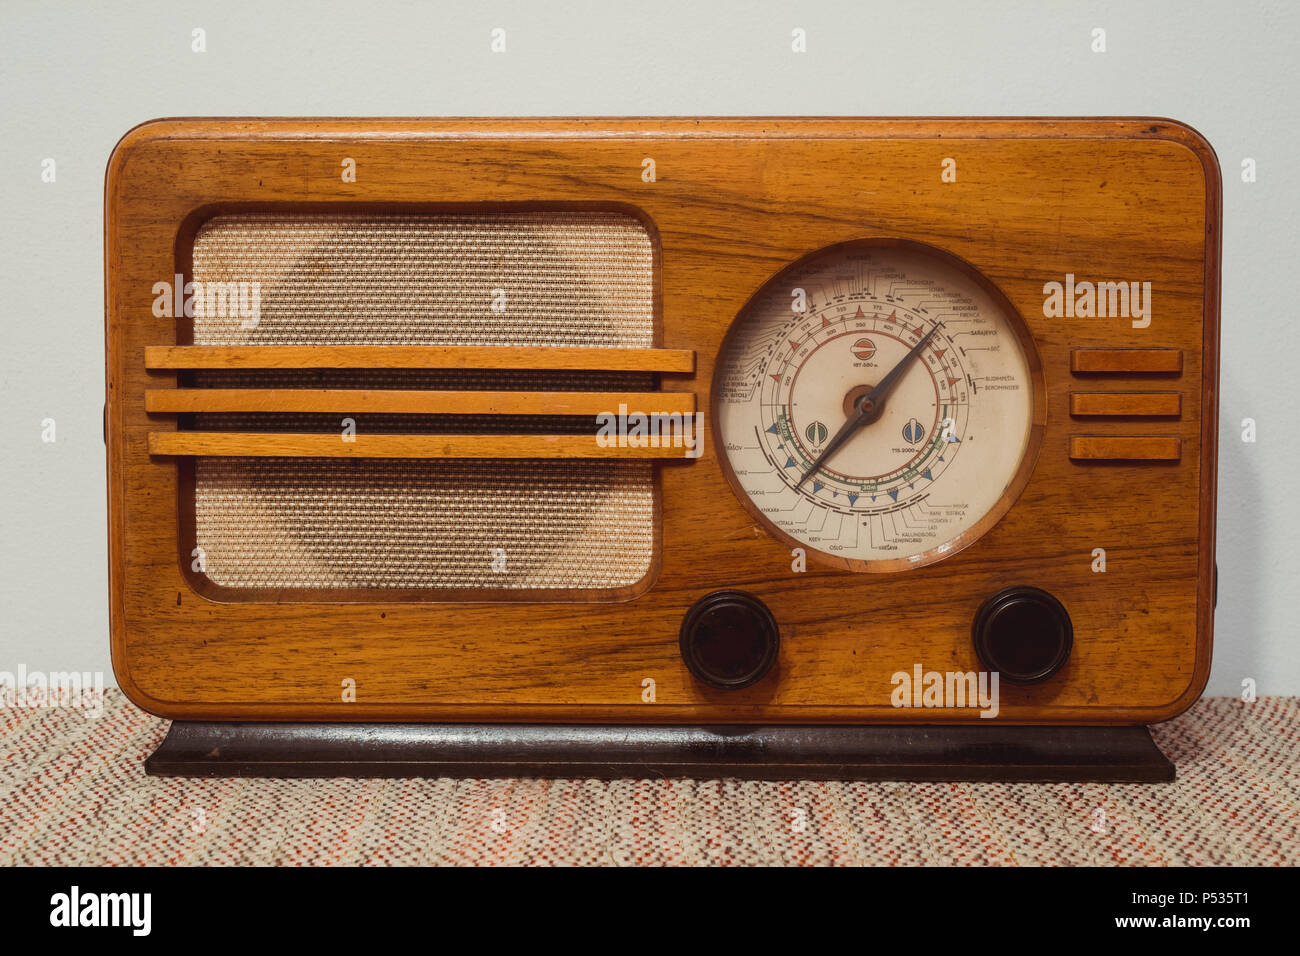 Old wooden radio on table. Vintage retro style Stock Photo - Alamy